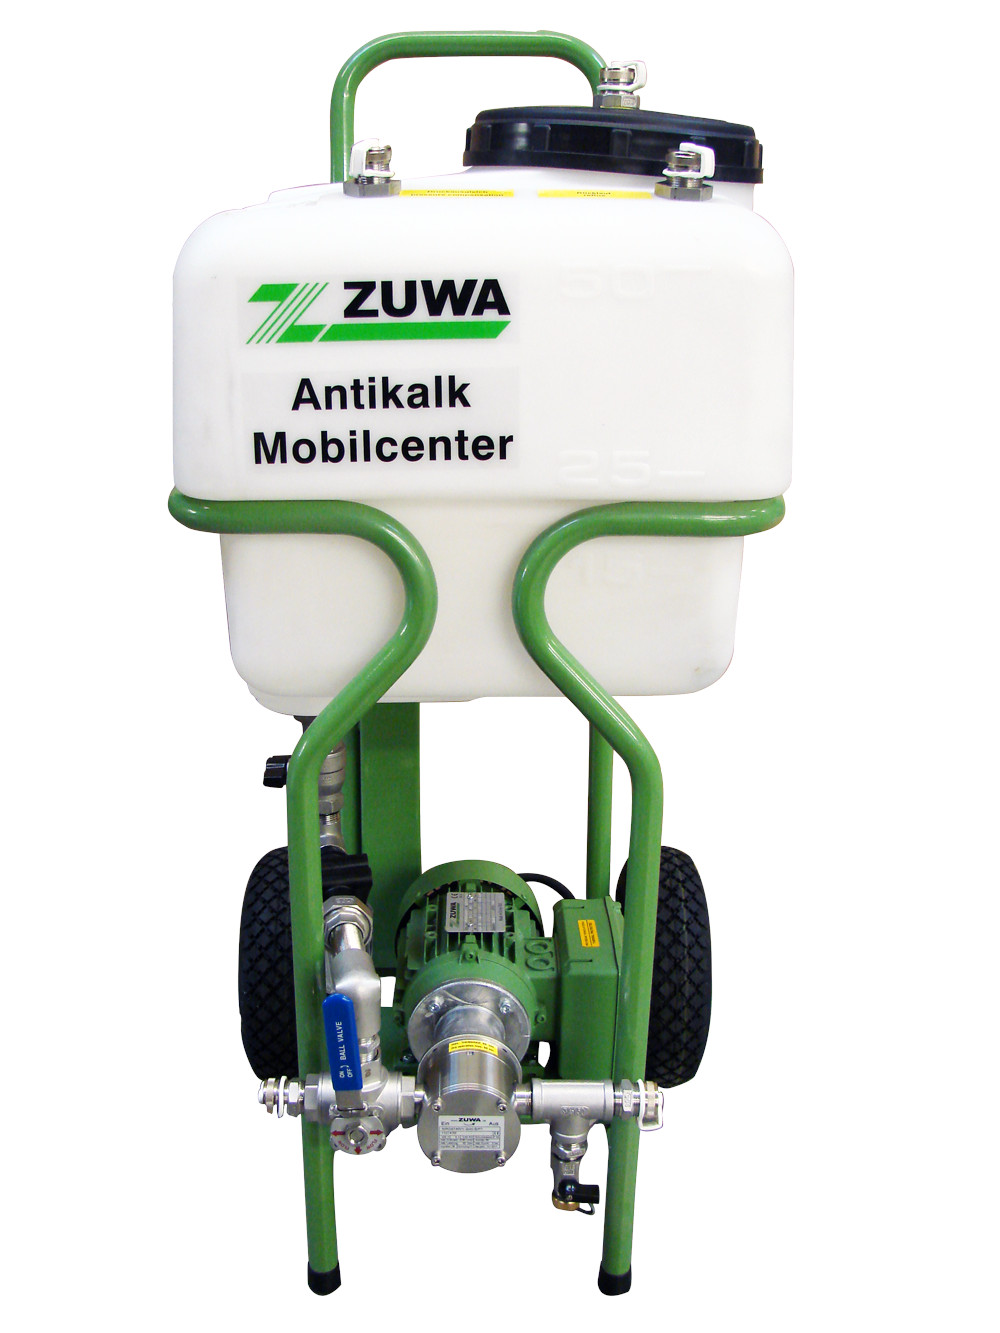 Zuwa Antikalk Mobilcenter 60 für Entkalker, NIROSTAR/V 2000-B - 13405955V-A